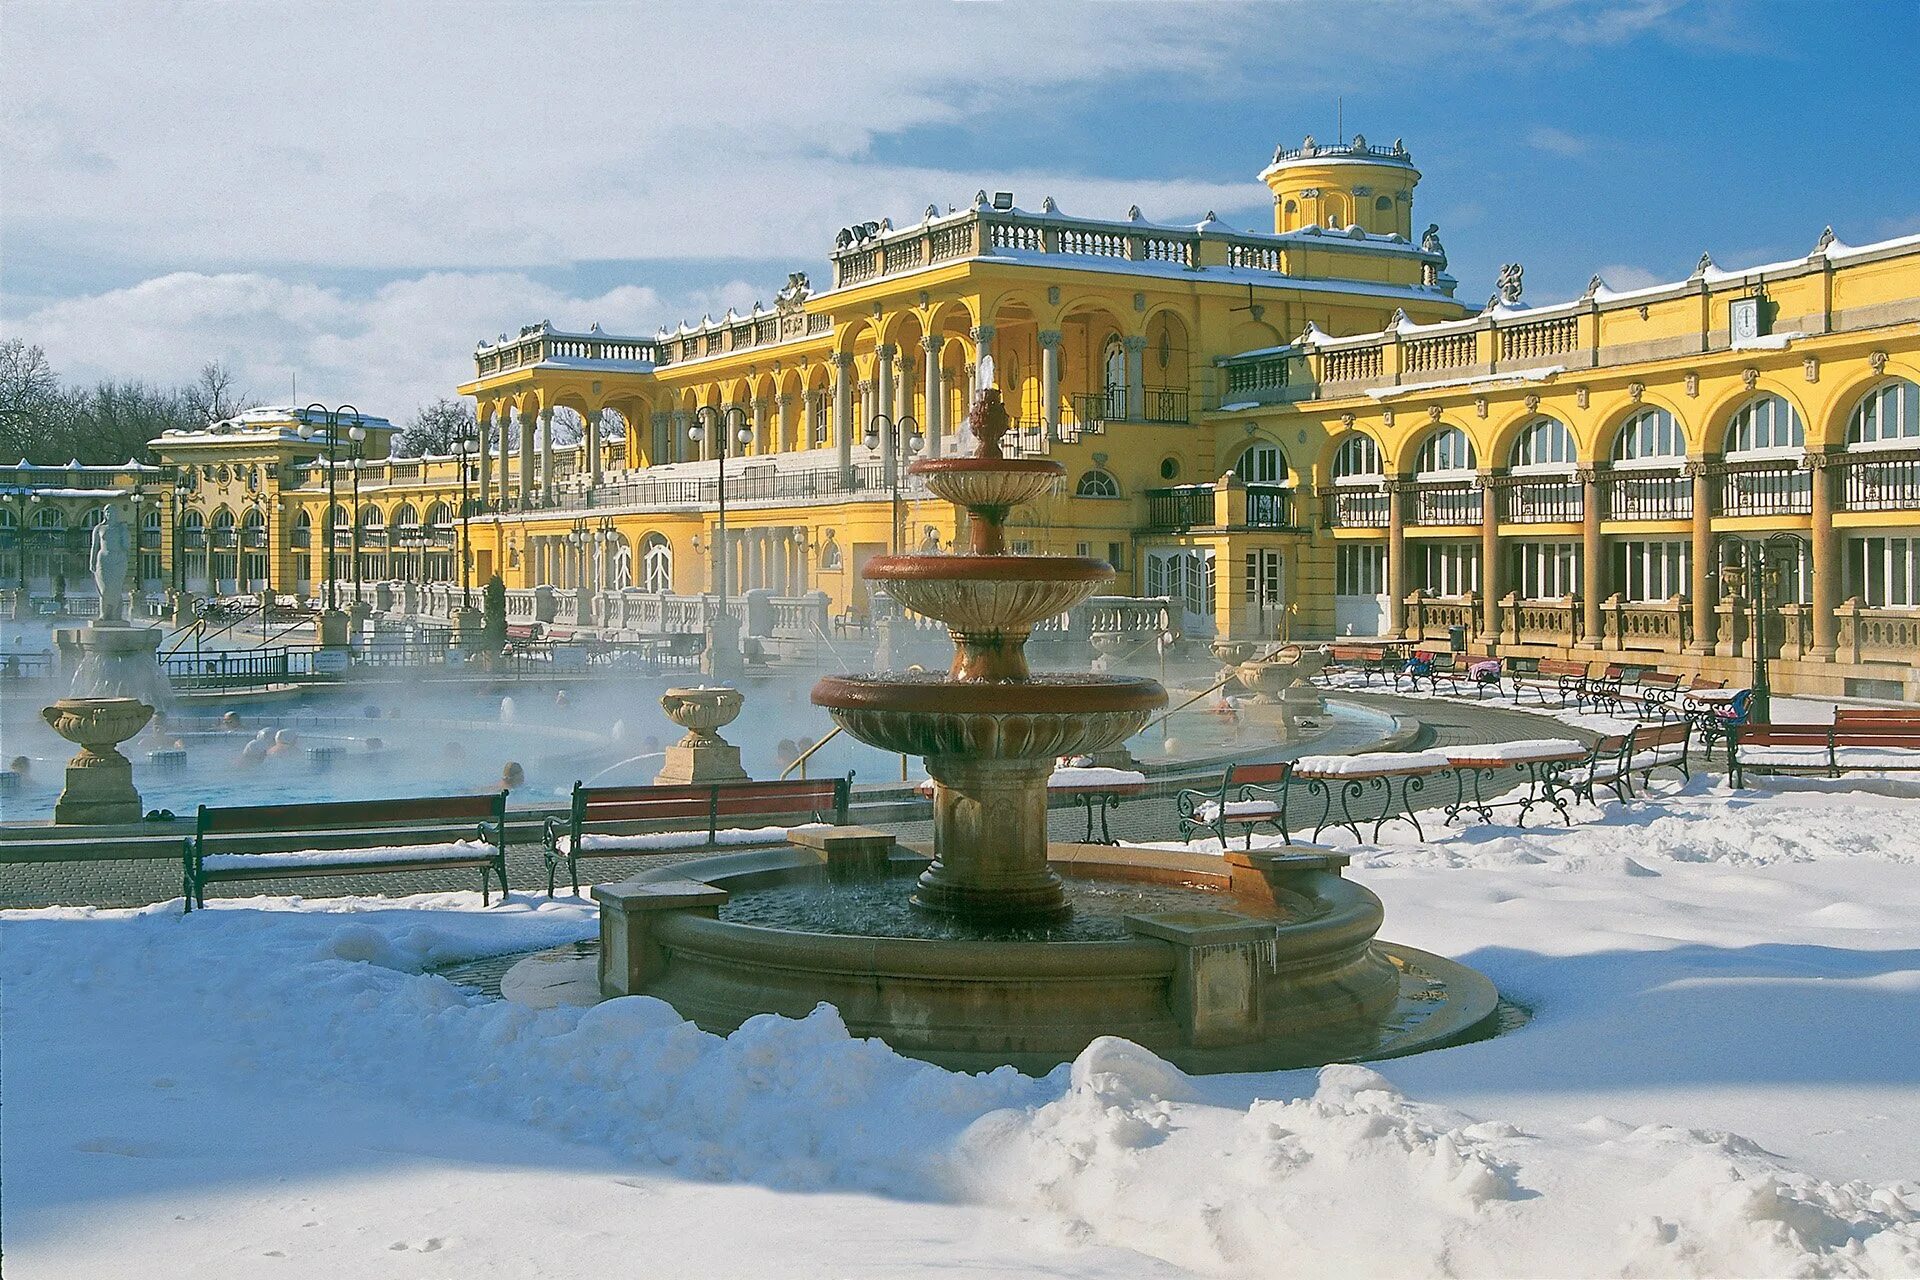 Купальни в будапеште. Венгрия купальни Сечени. Будапешт купальни Сечени зимой. Термальные купальни Сечени в Будапеште. Термы Сечени в Будапеште зимой.